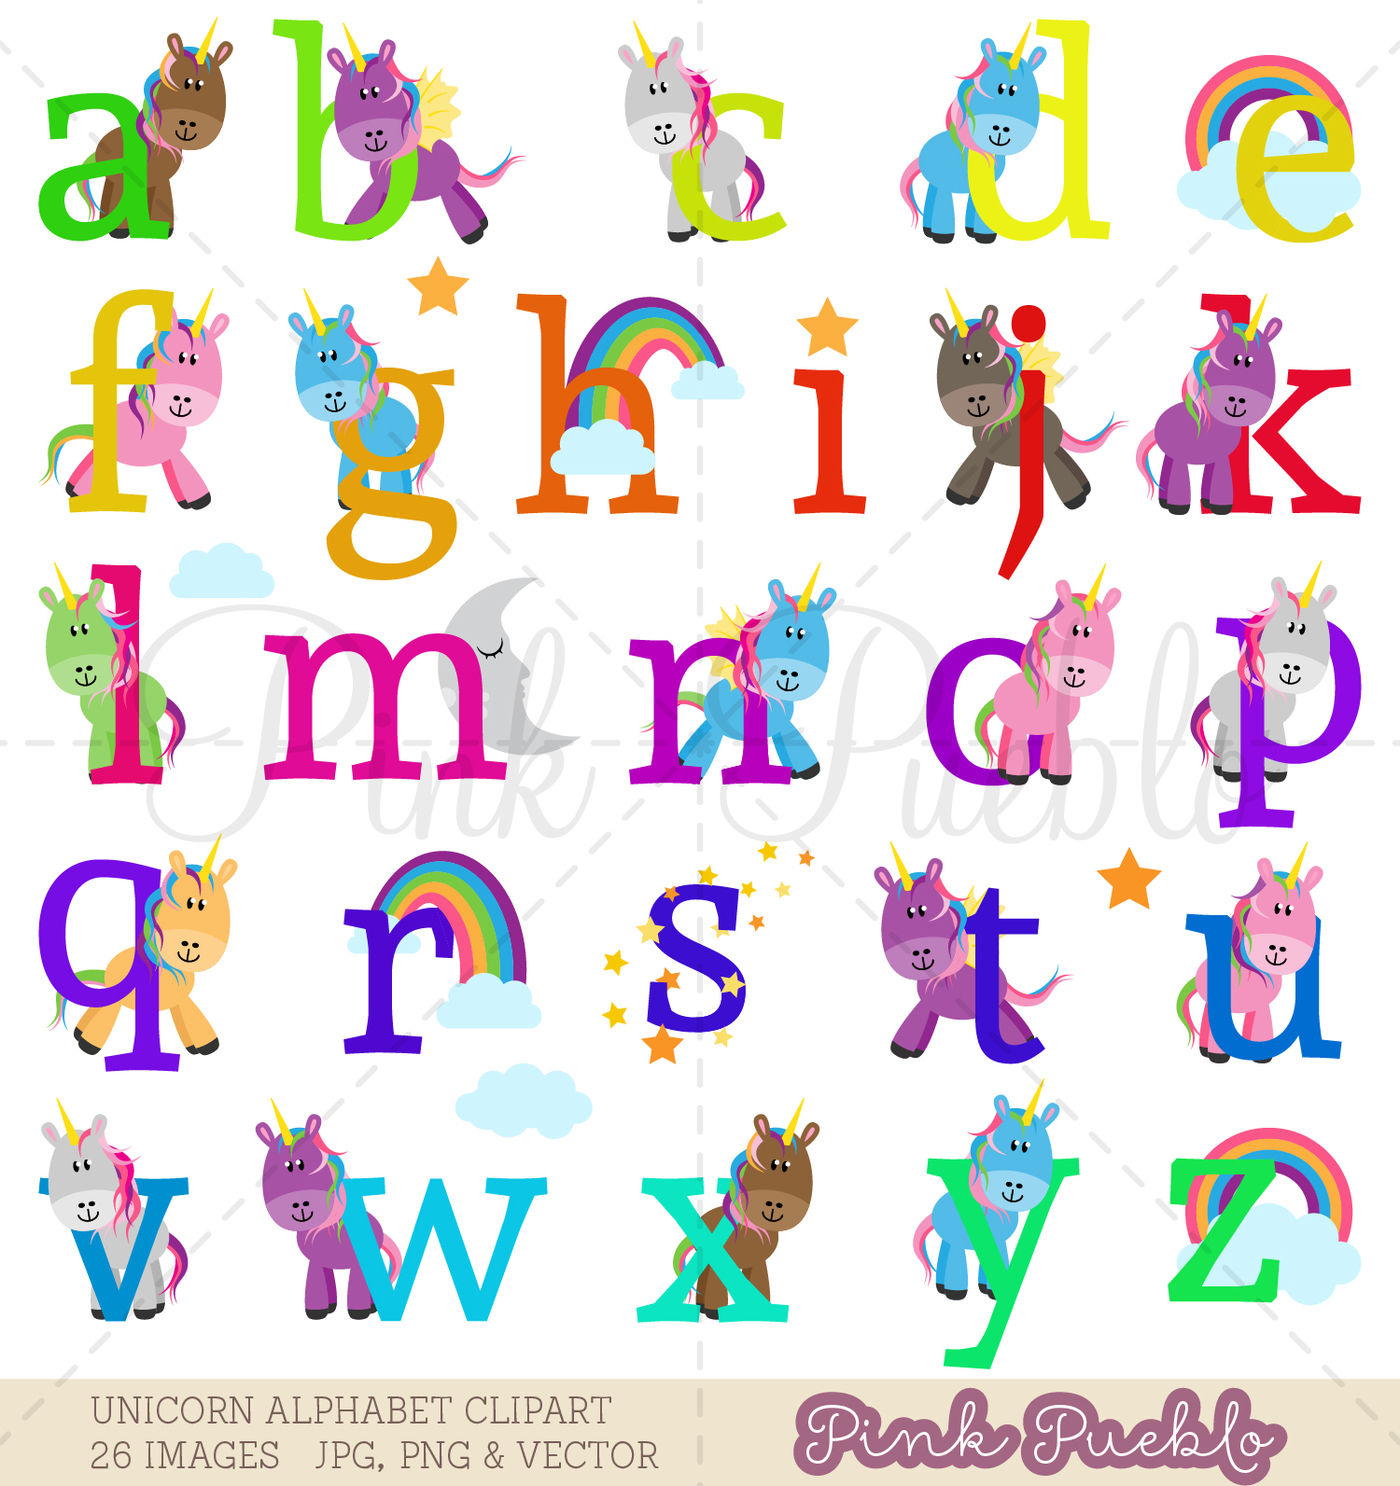 Unicorn Alphabet Clipart And Vectors By Devon Carlson Thehungryjpeg Com